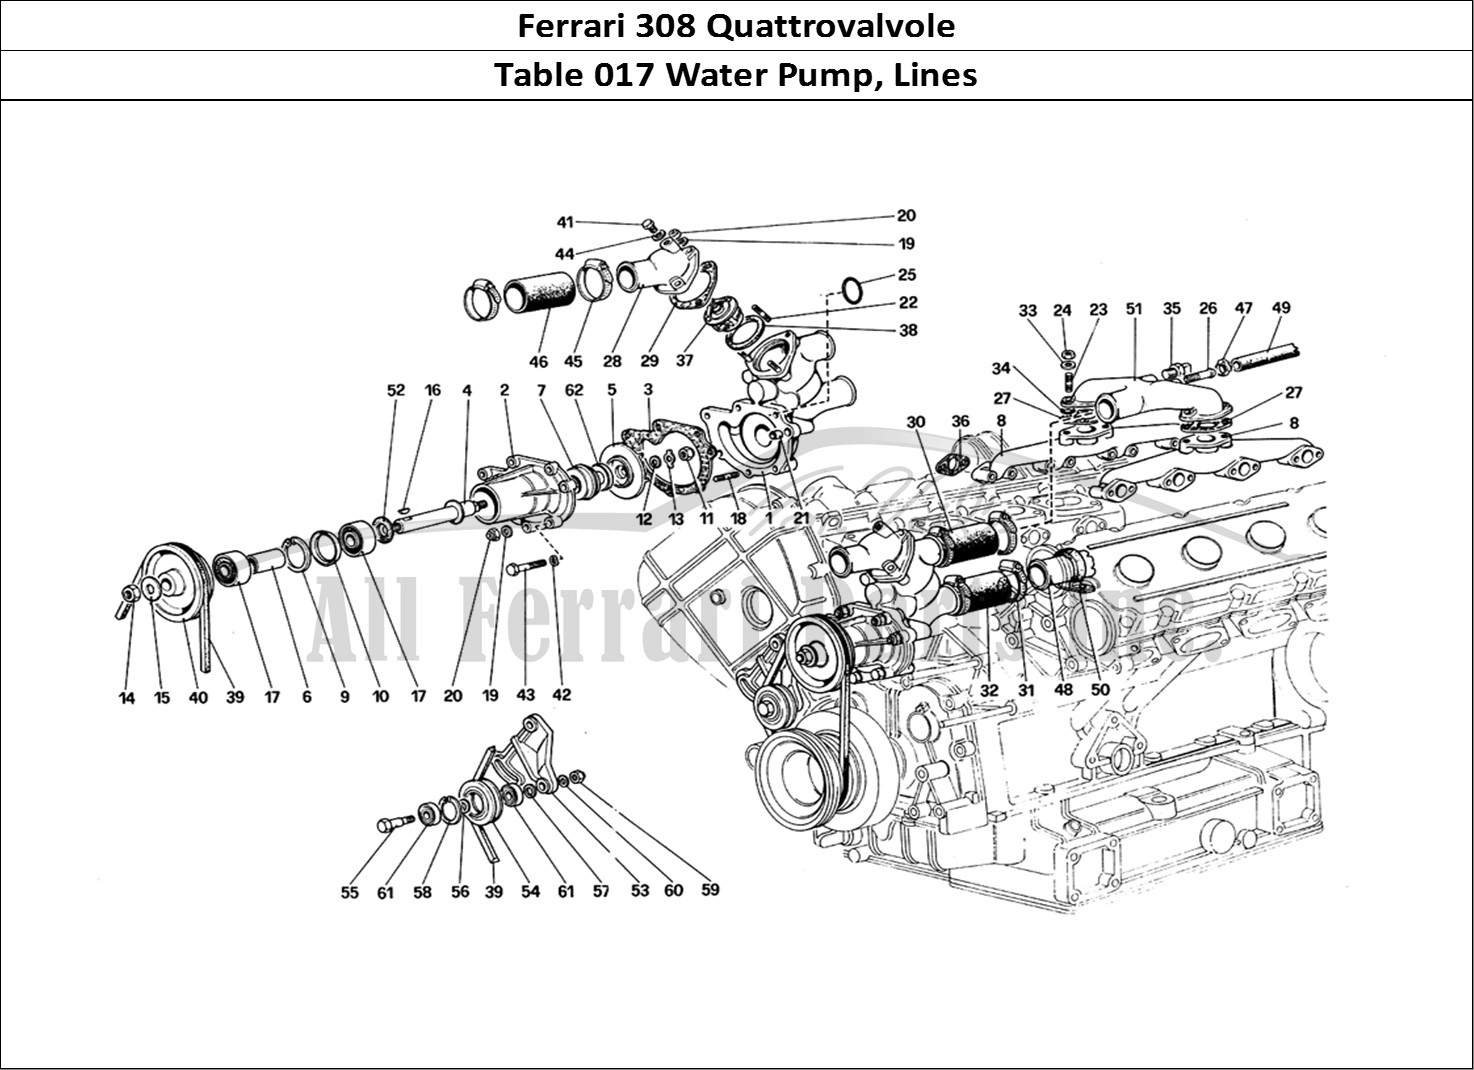 Ferrari Parts Ferrari 308 Quattrovalvole (1985) Page 017 Water Pump and Pipings